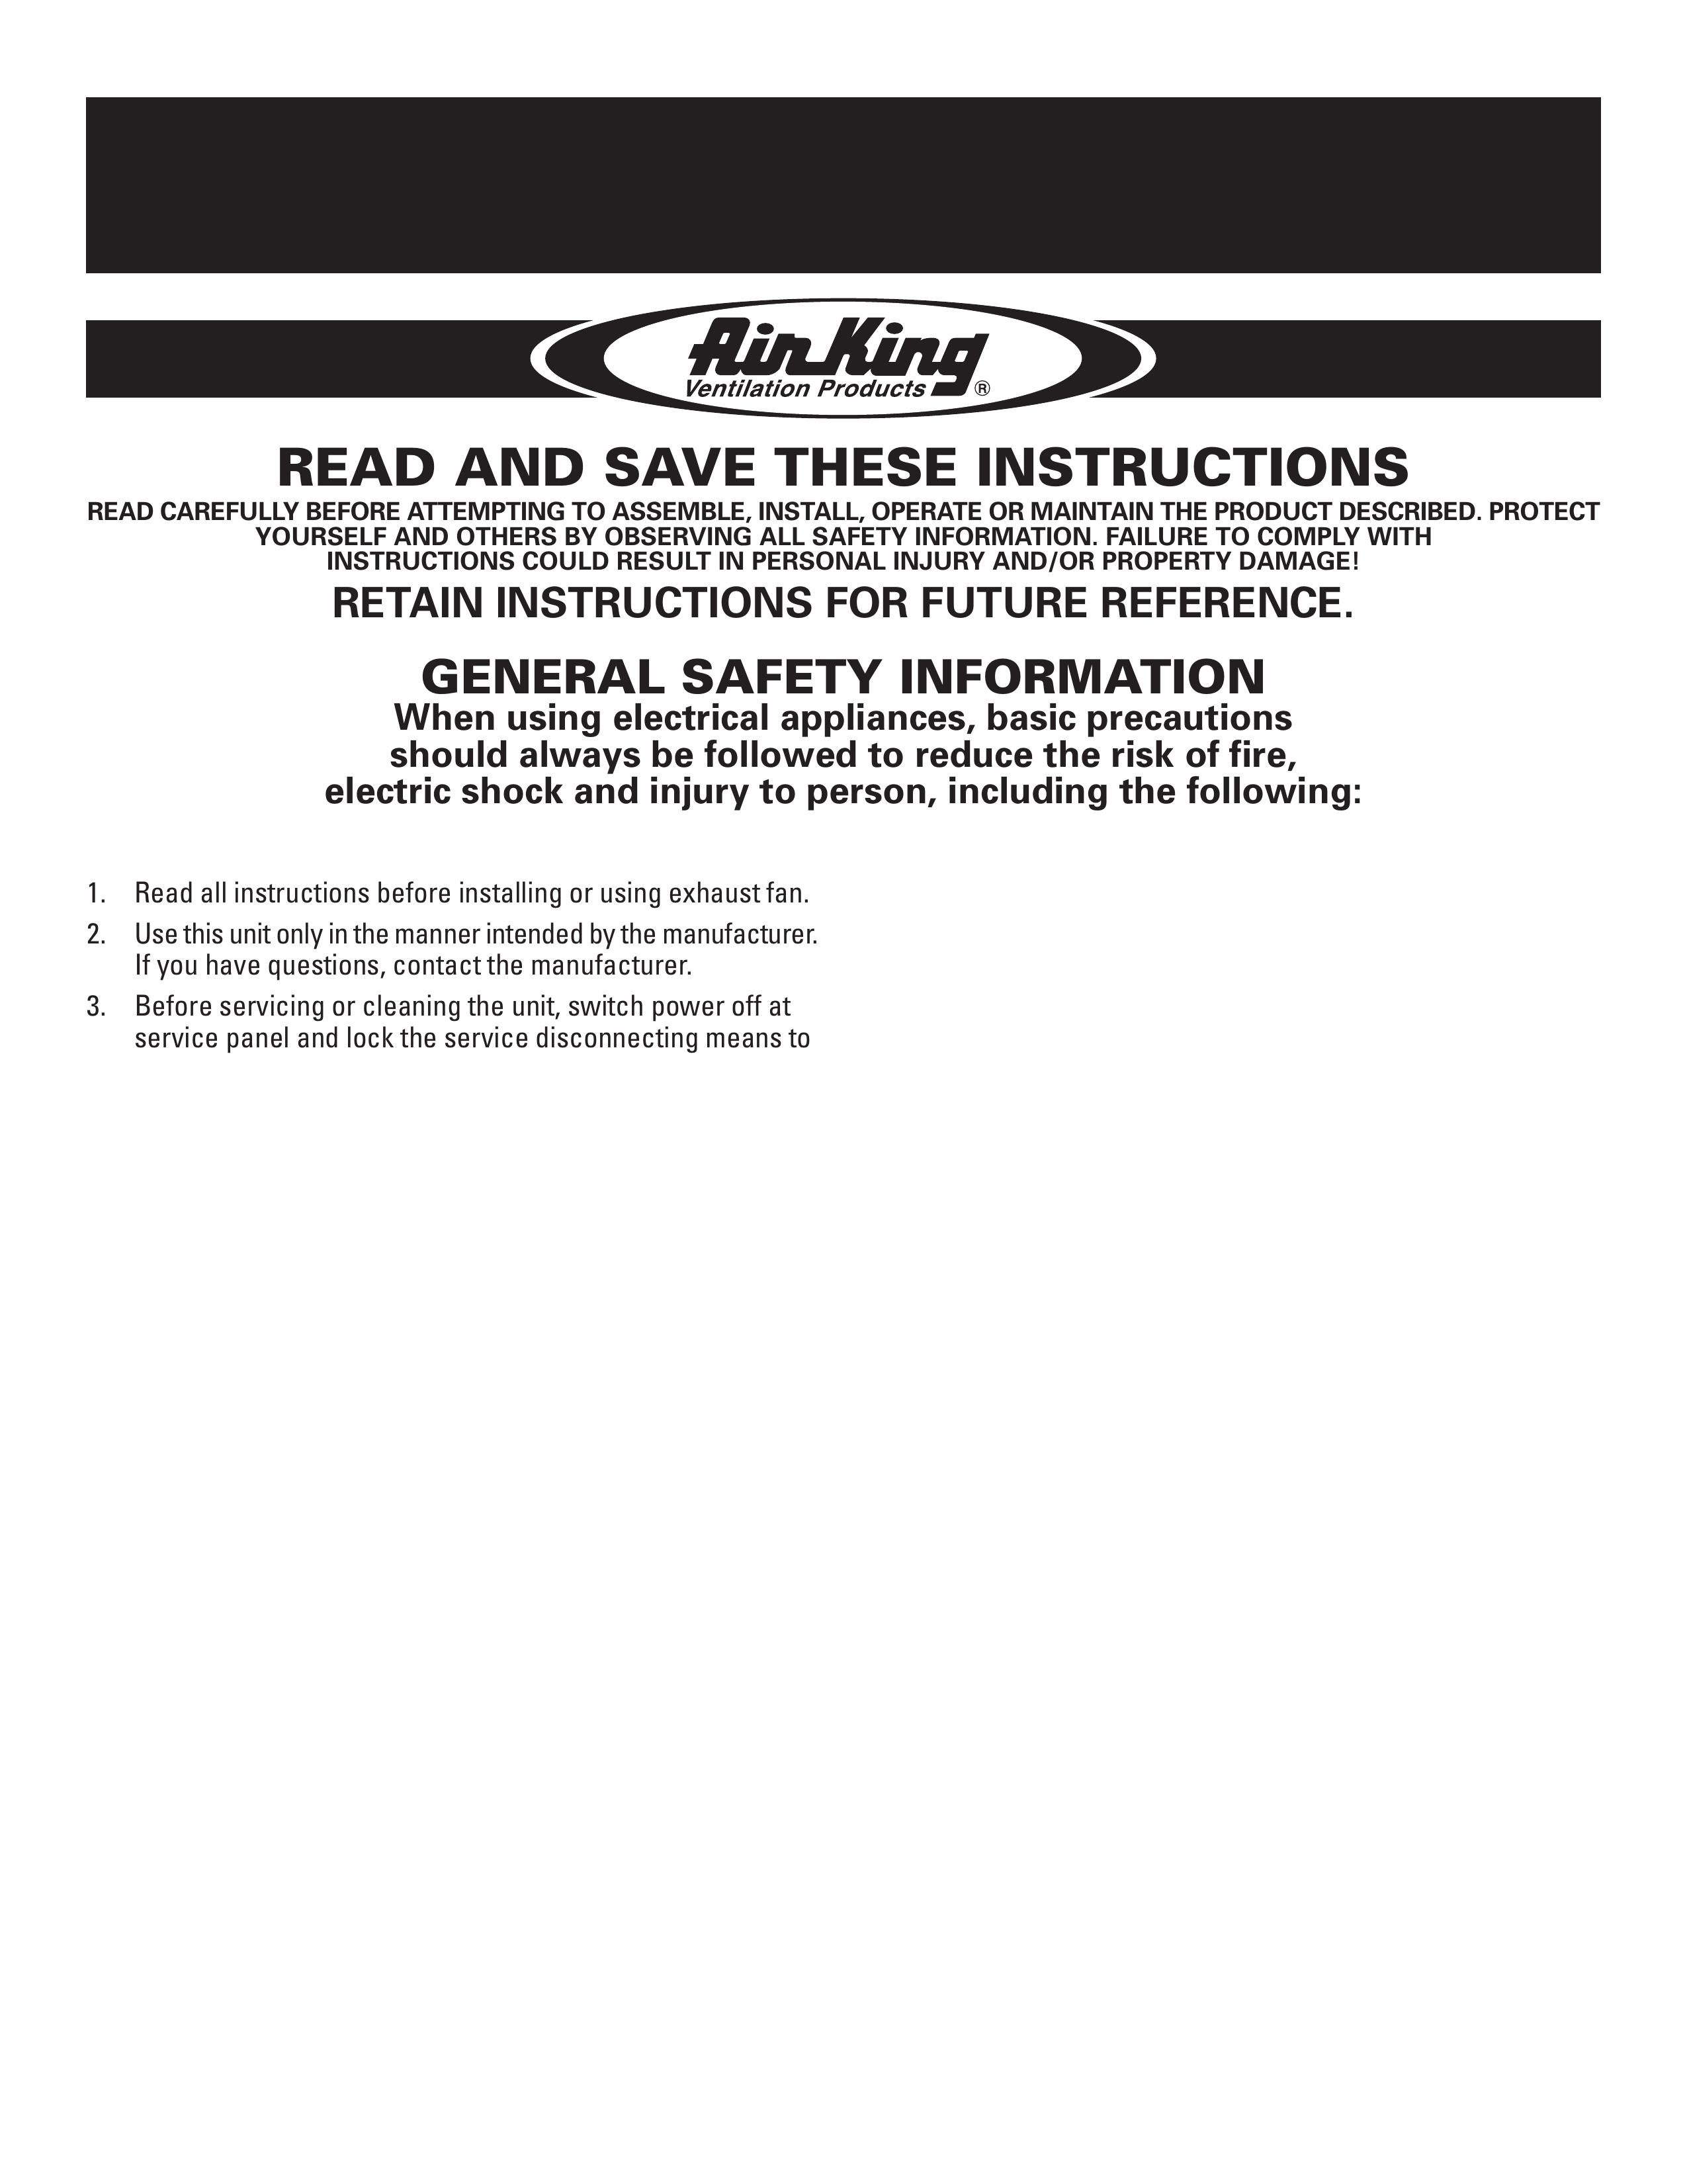 Air King AK90 Blower User Manual